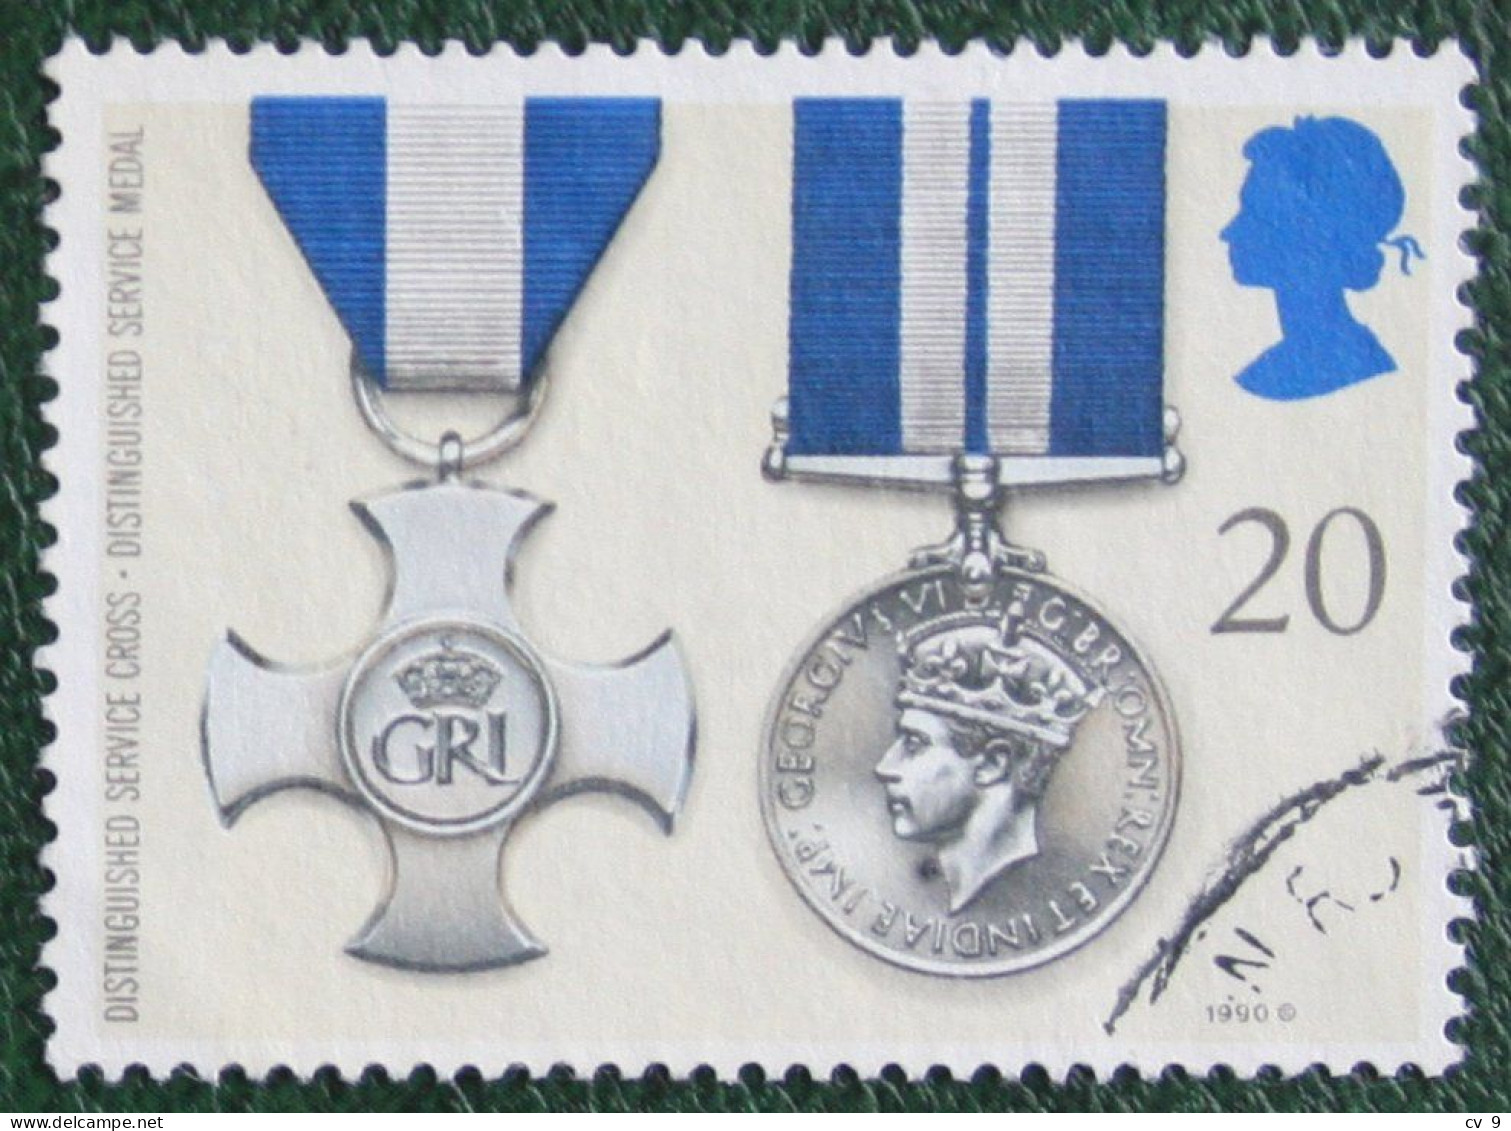 Awards Bravery Medals (Mi 1294) 1990 Used Gebruikt Oblitere ENGLAND GRANDE-BRETAGNE GB GREAT BRITAIN - Usati